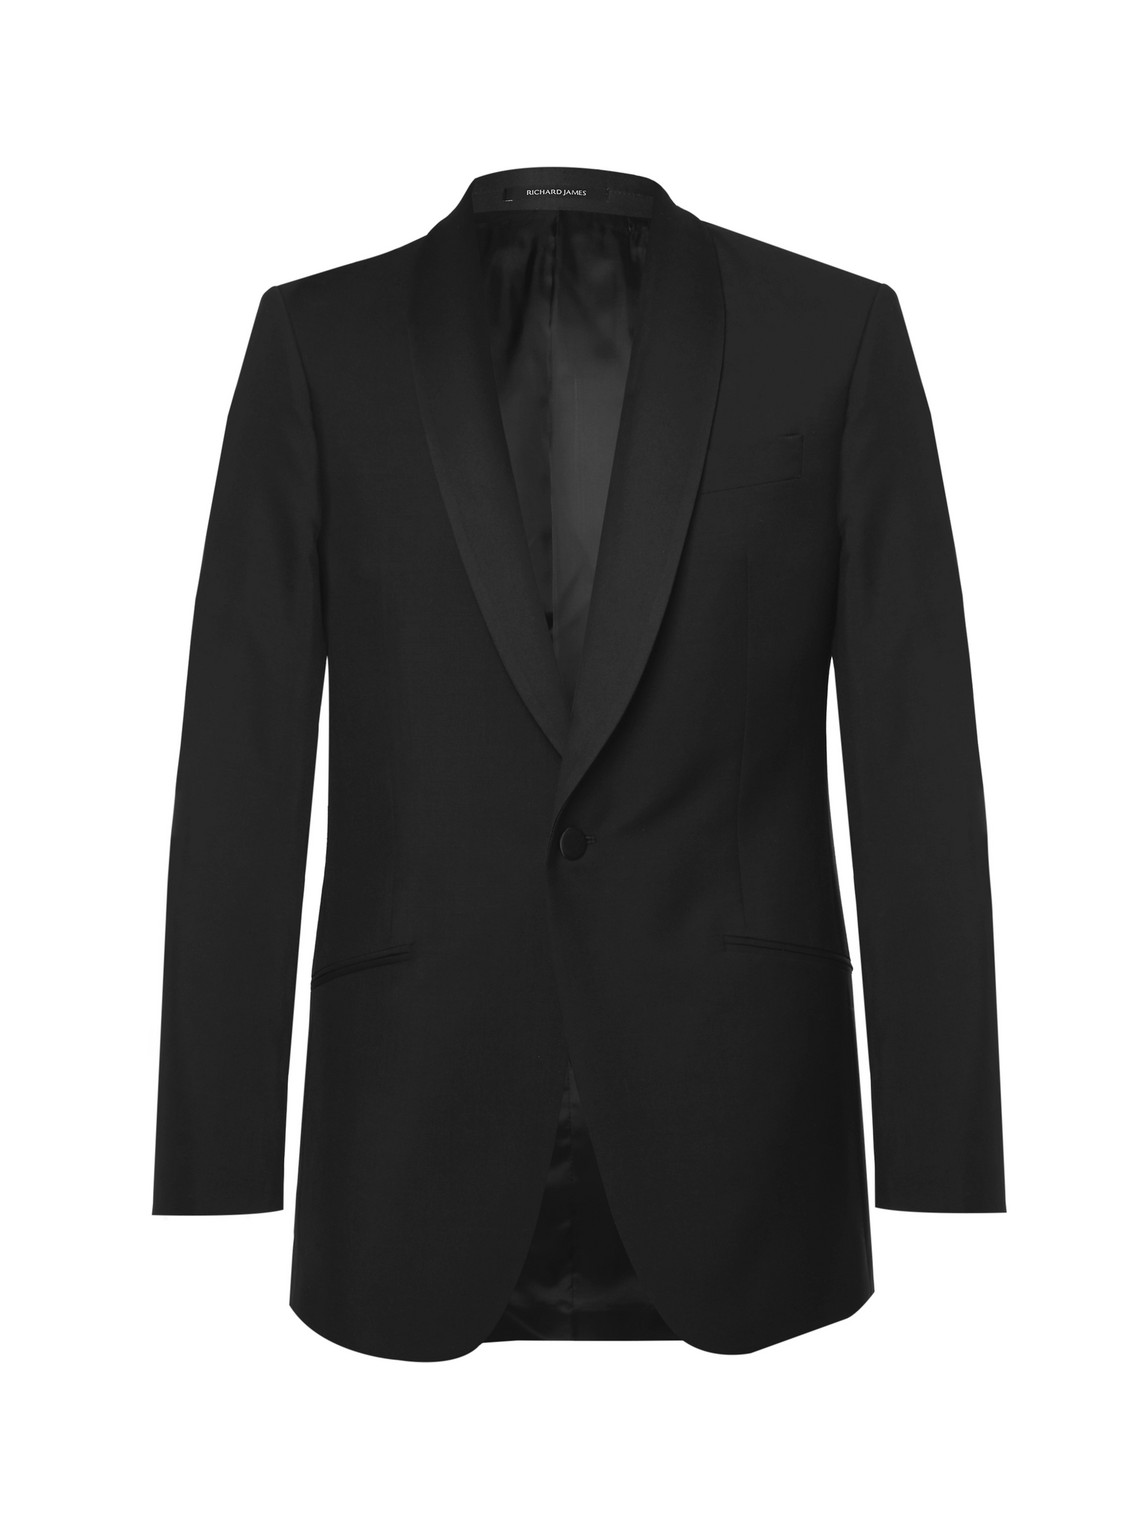 Richard James Black Slim-fit Wool And Mohair-blend Tuxedo Jacket